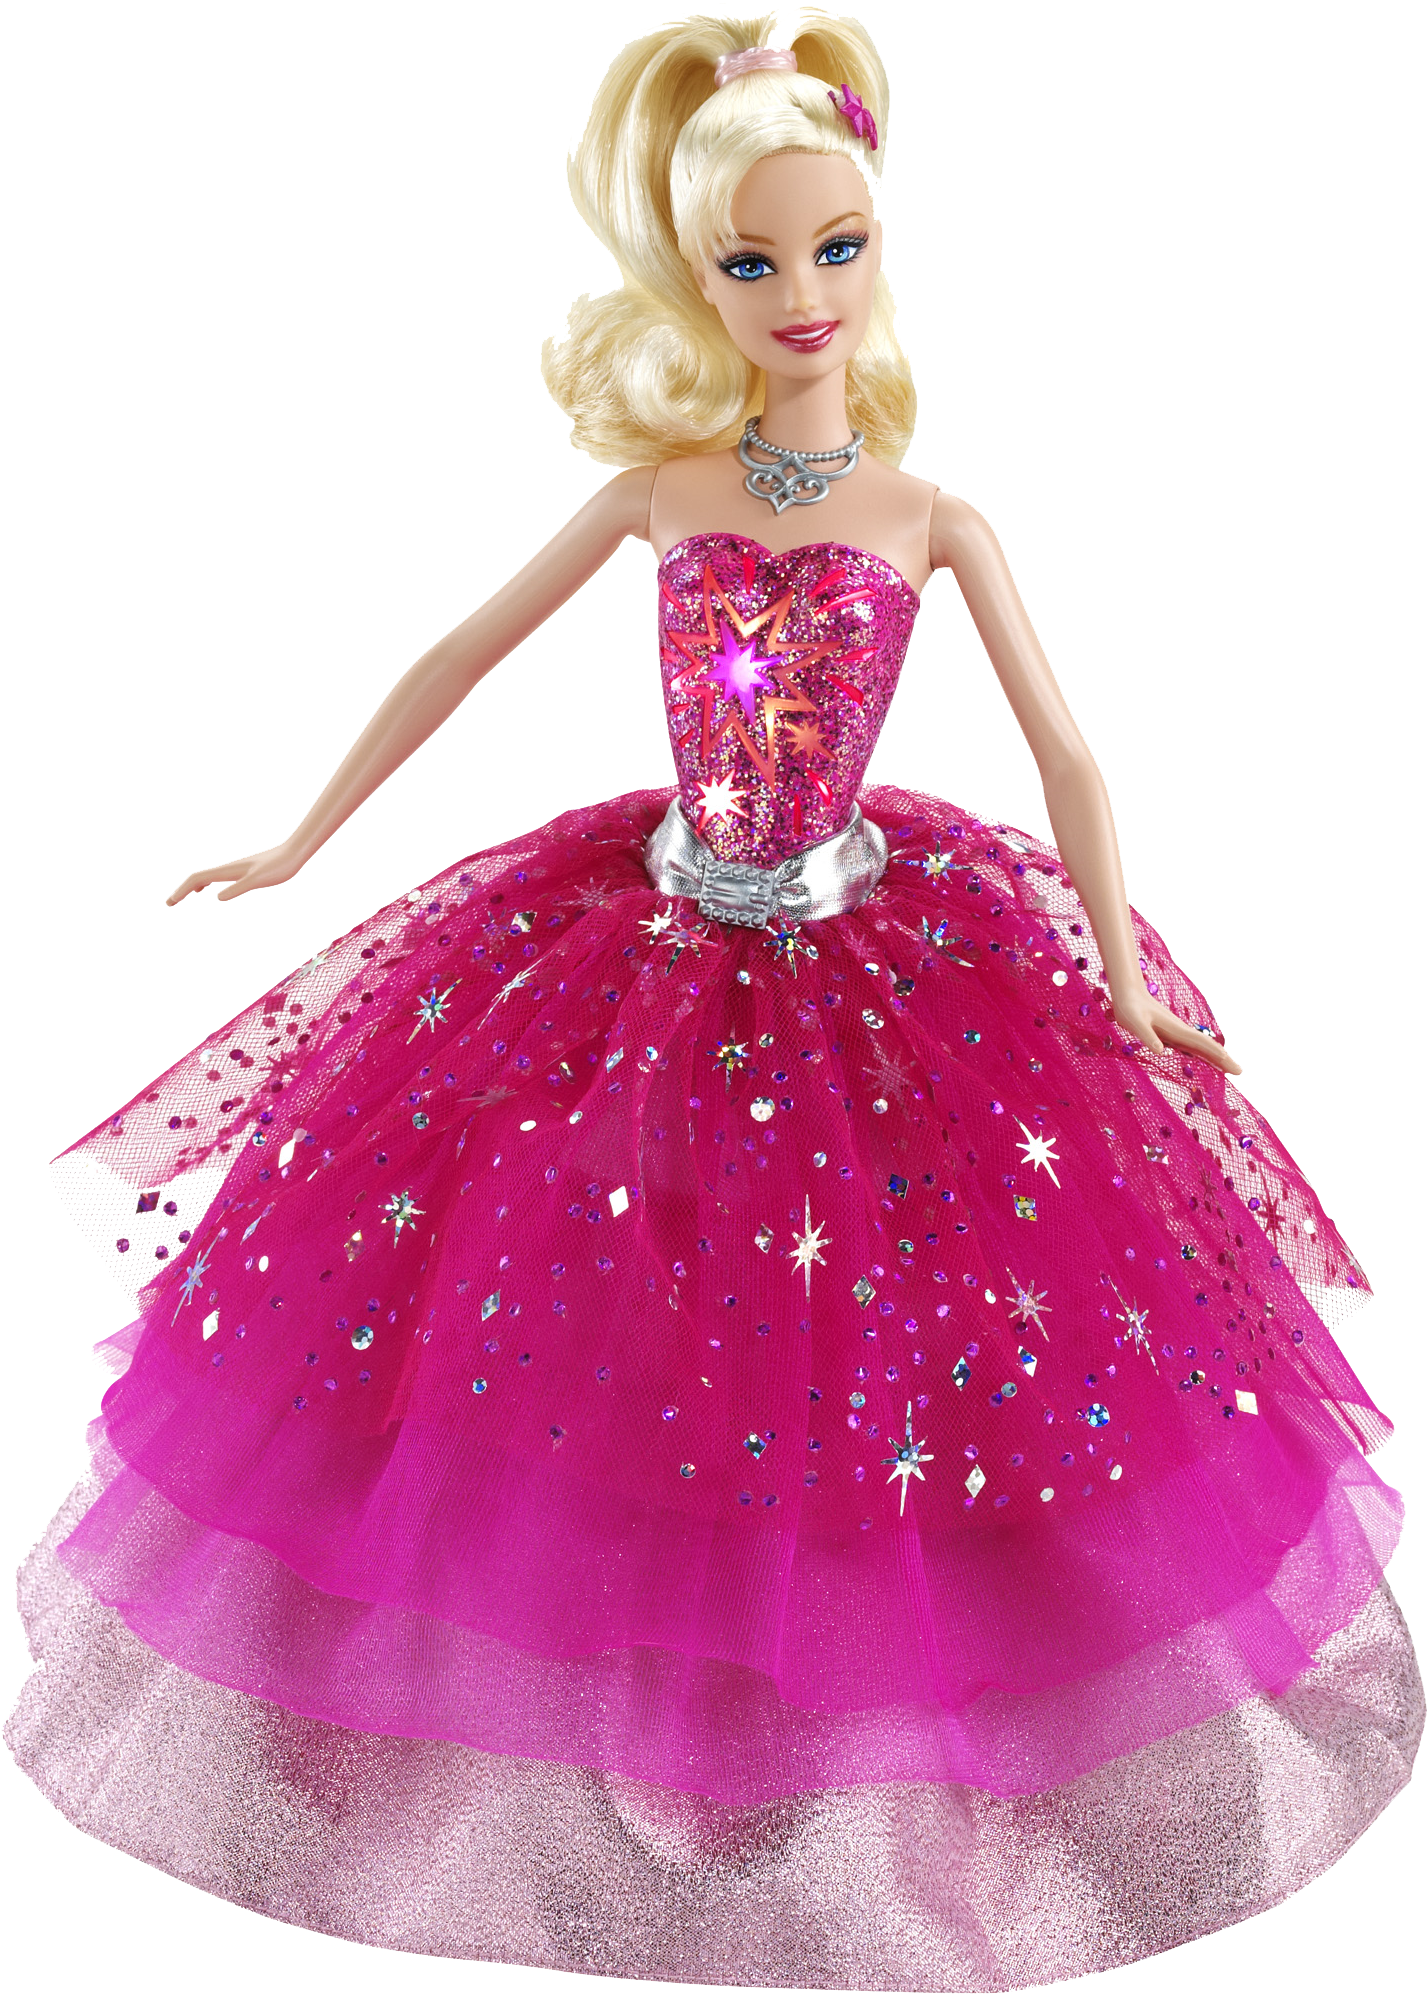 Barbie Doll PNG Image Background